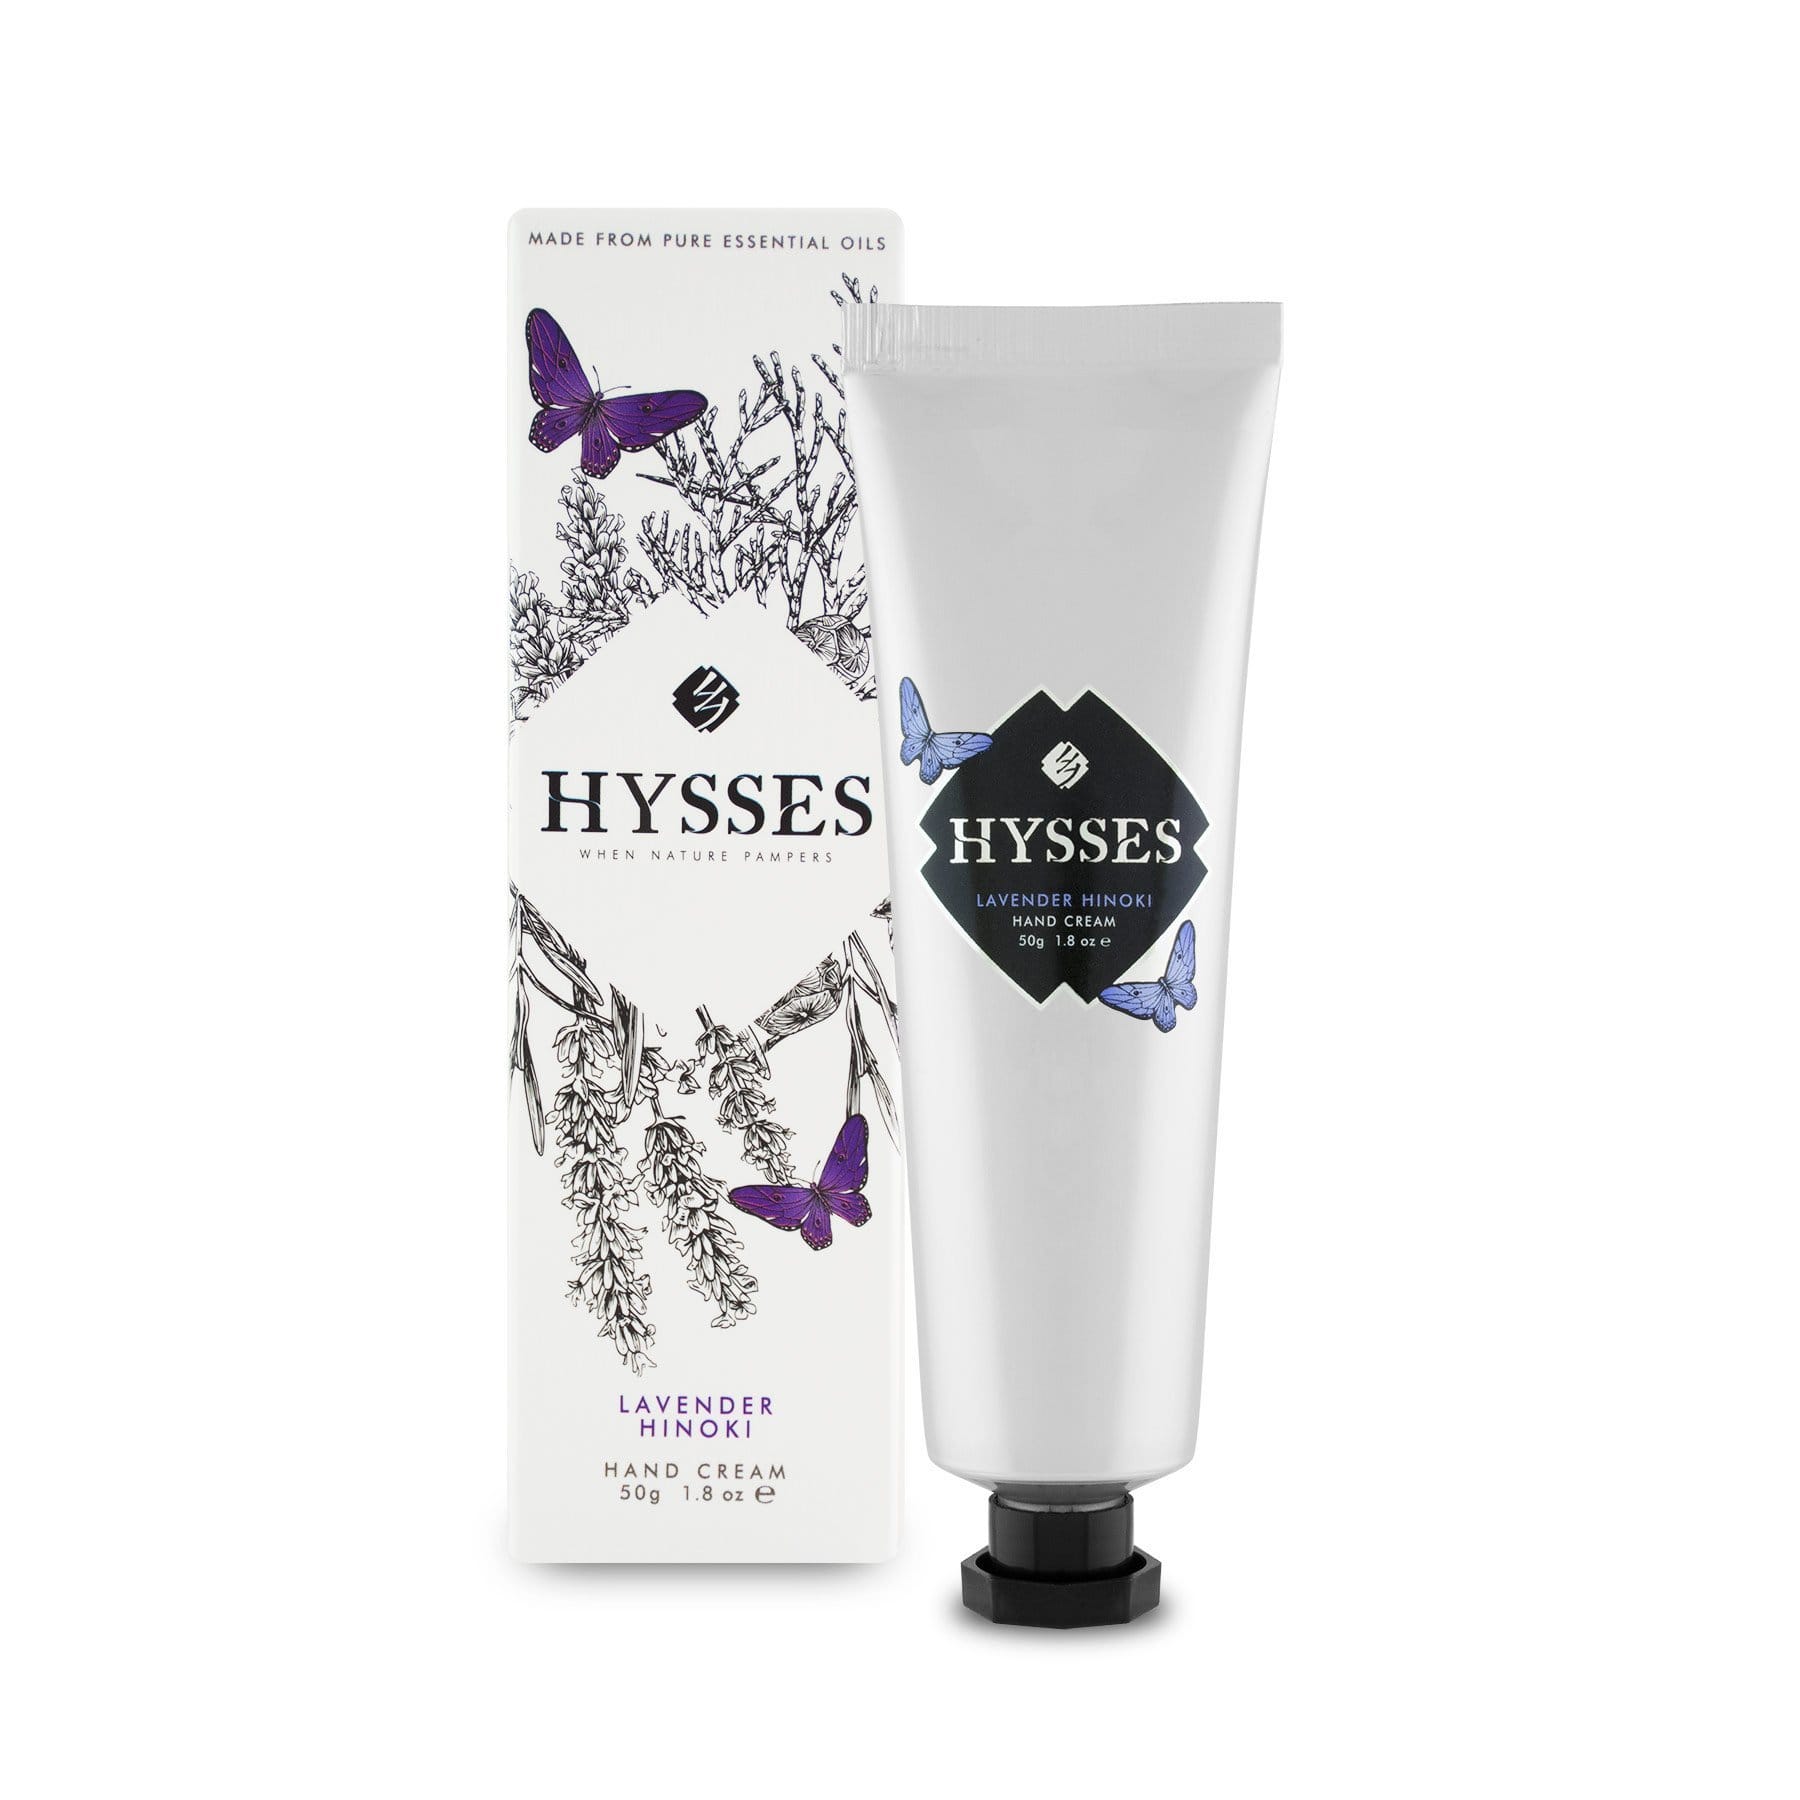 Hysses Body Care Hand Cream Lavender Hinoki